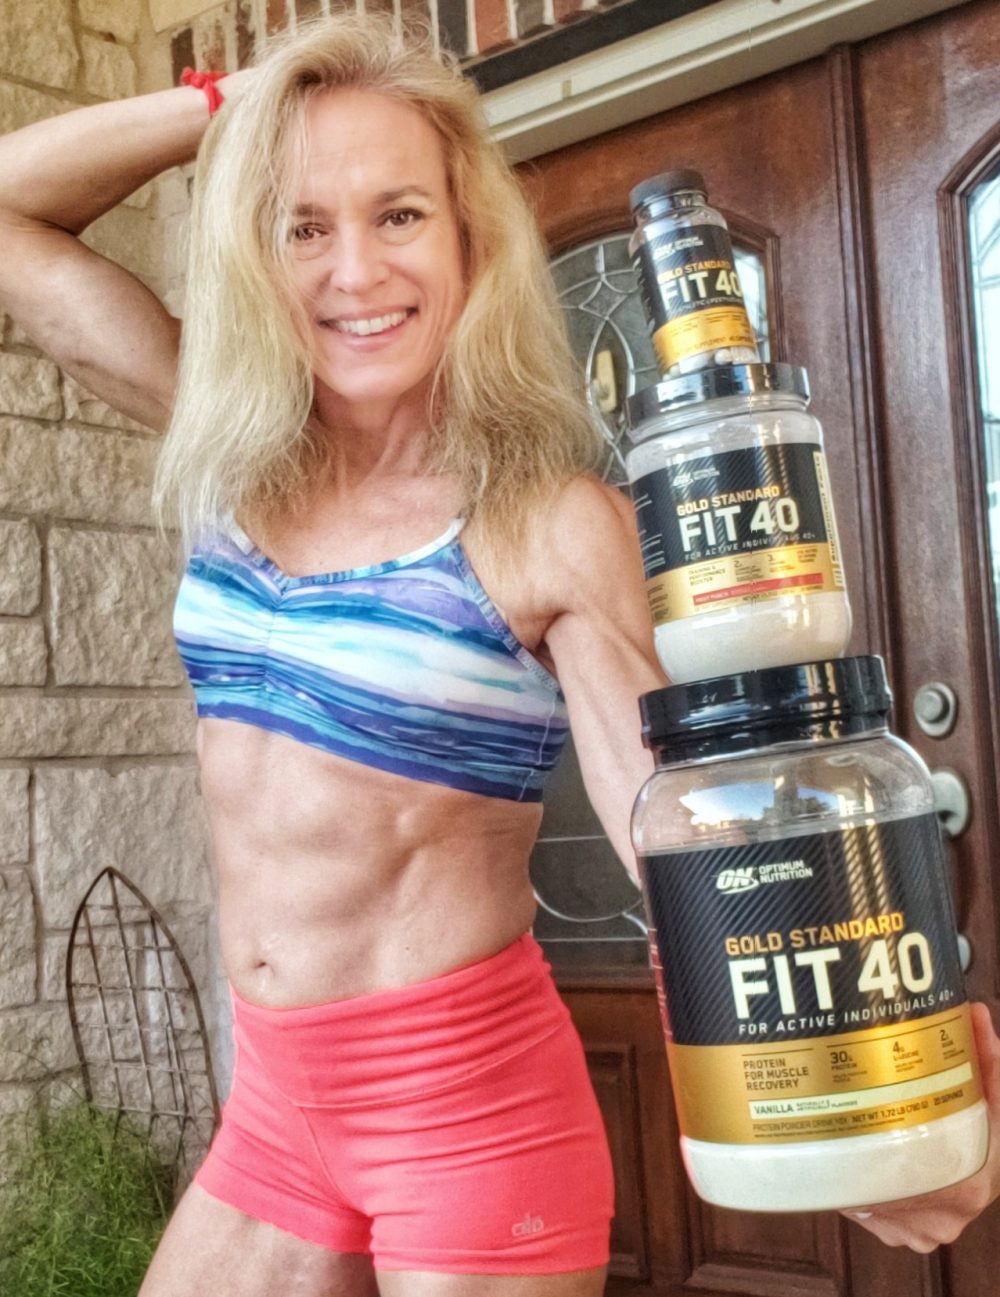 Optimum Nutrition Fit 40 Muscle Protein Powder Jennifer FIsher theiftfork.com